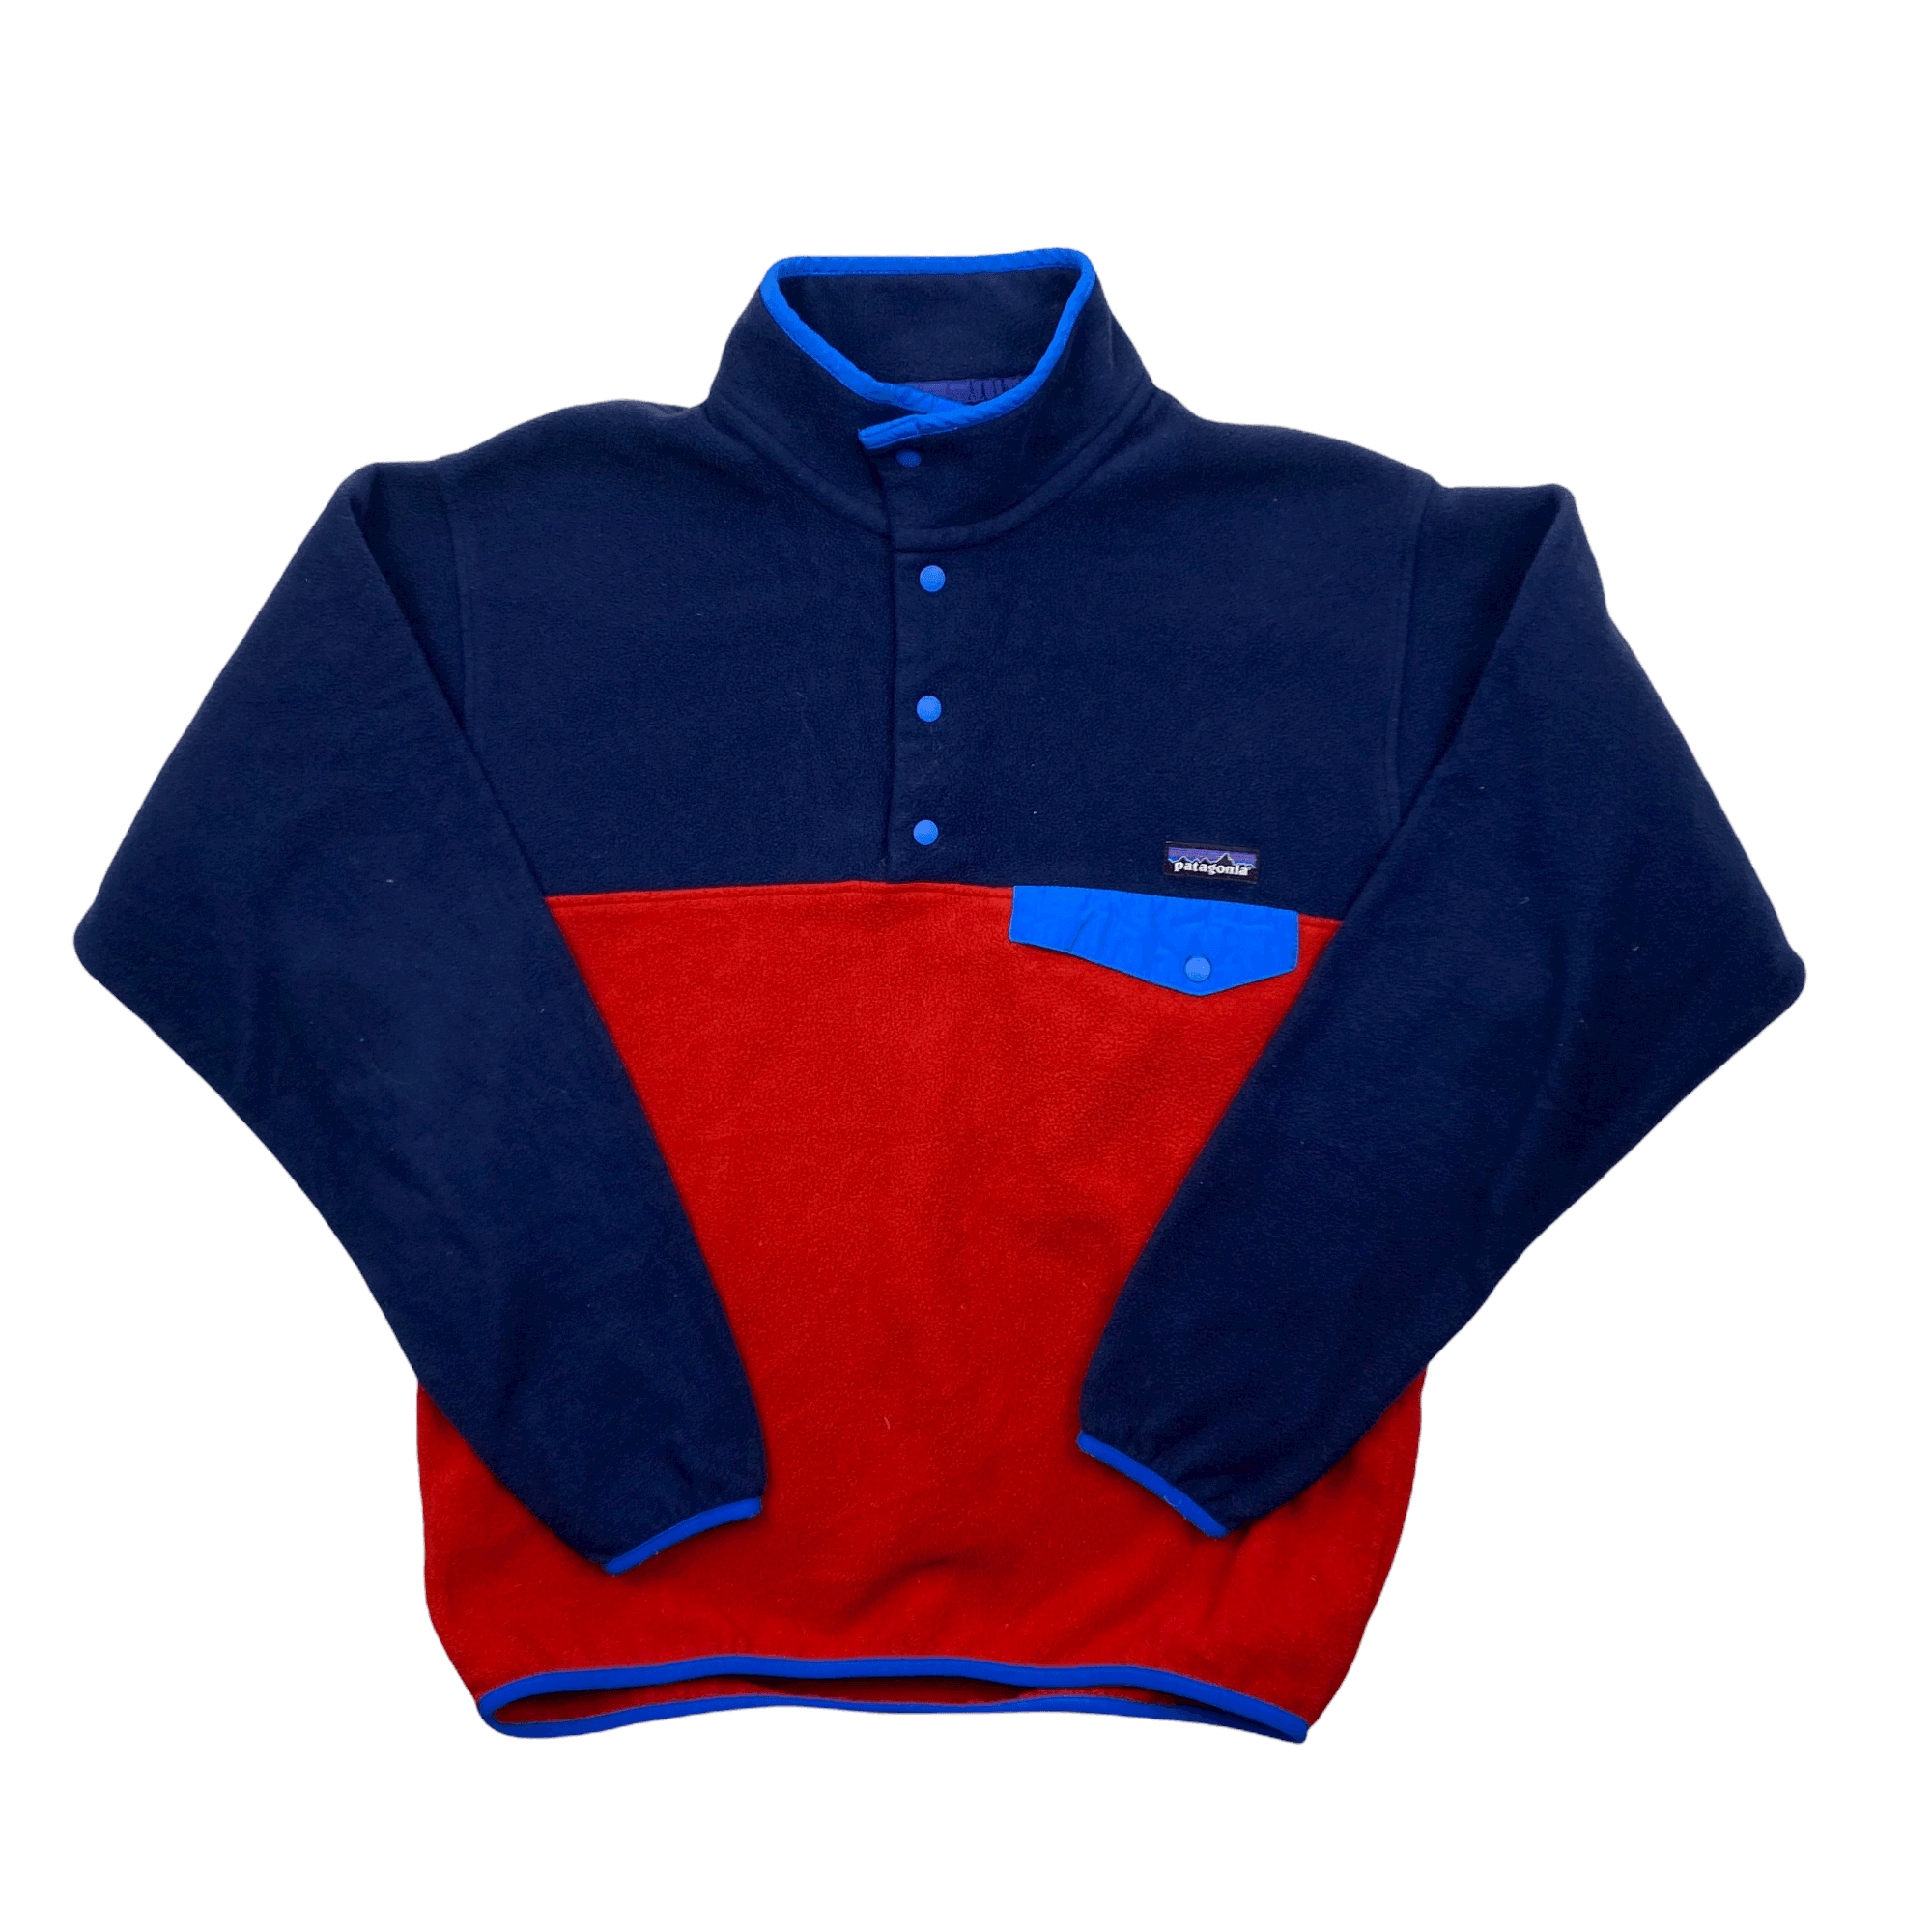 Vintage 90s Navy Blue + Red Patagonia Synchilla Fleece - Medium - The Streetwear Studio